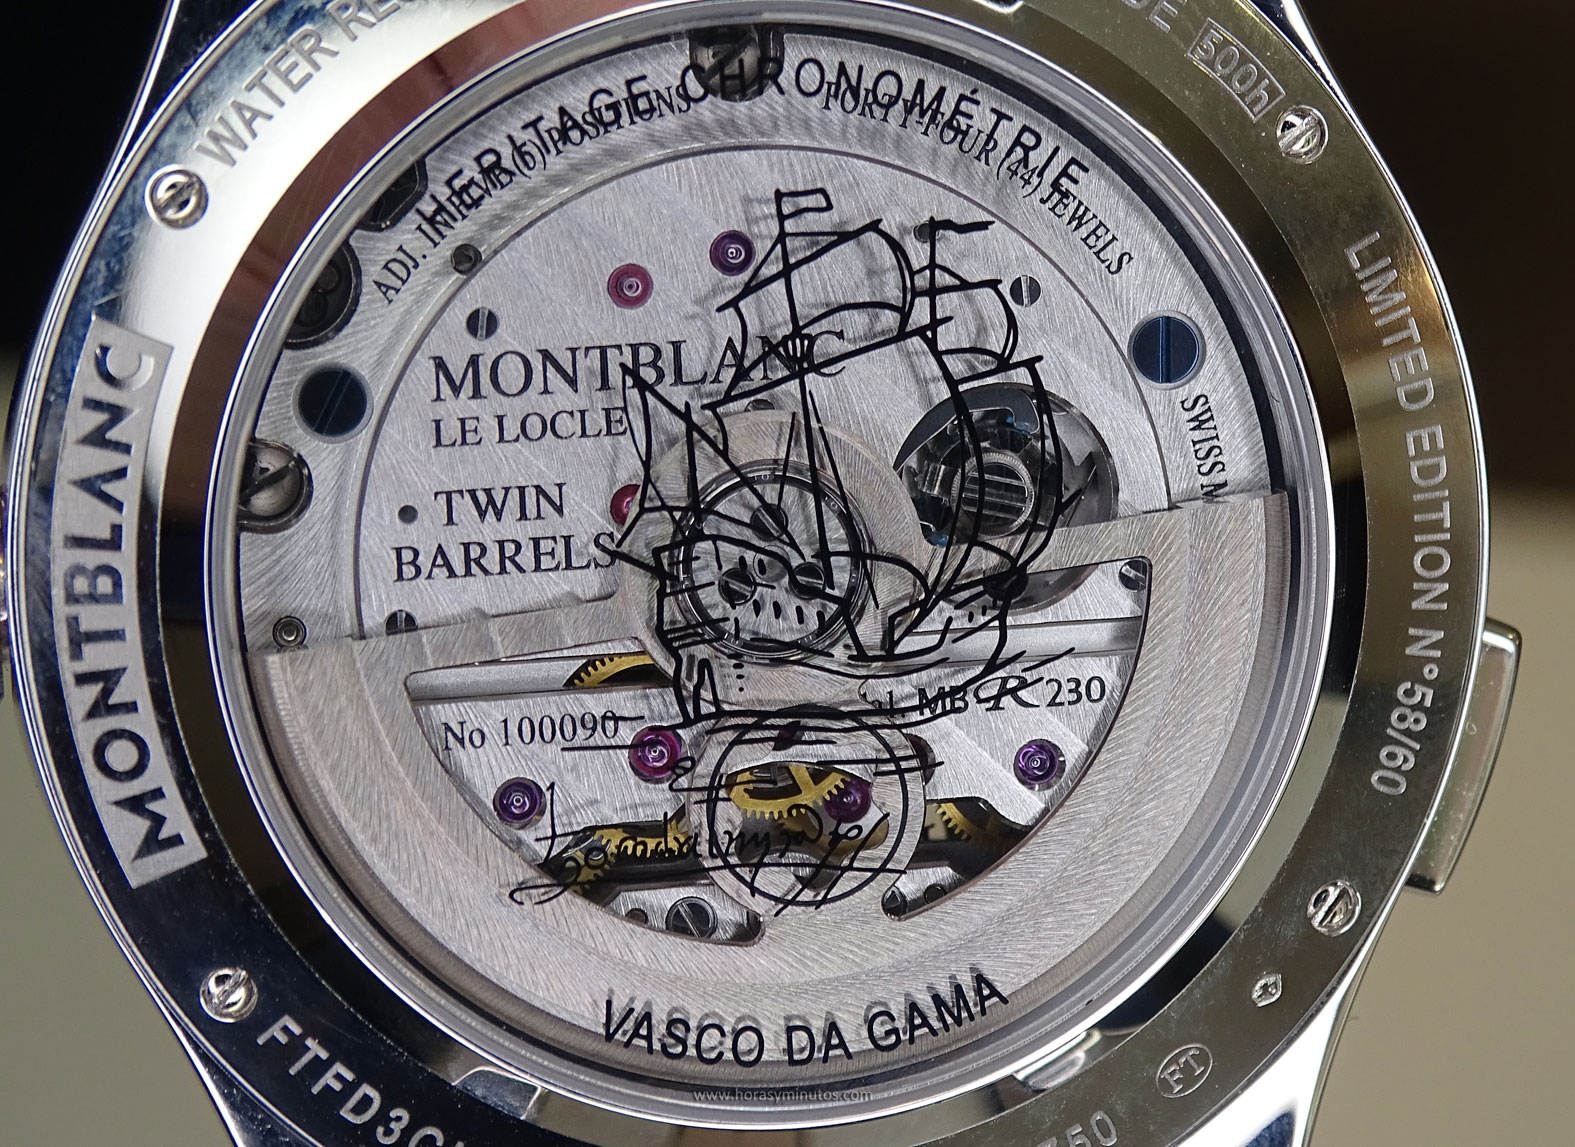 Montblanc chronograph exotourbillon vasco da gama - calibre